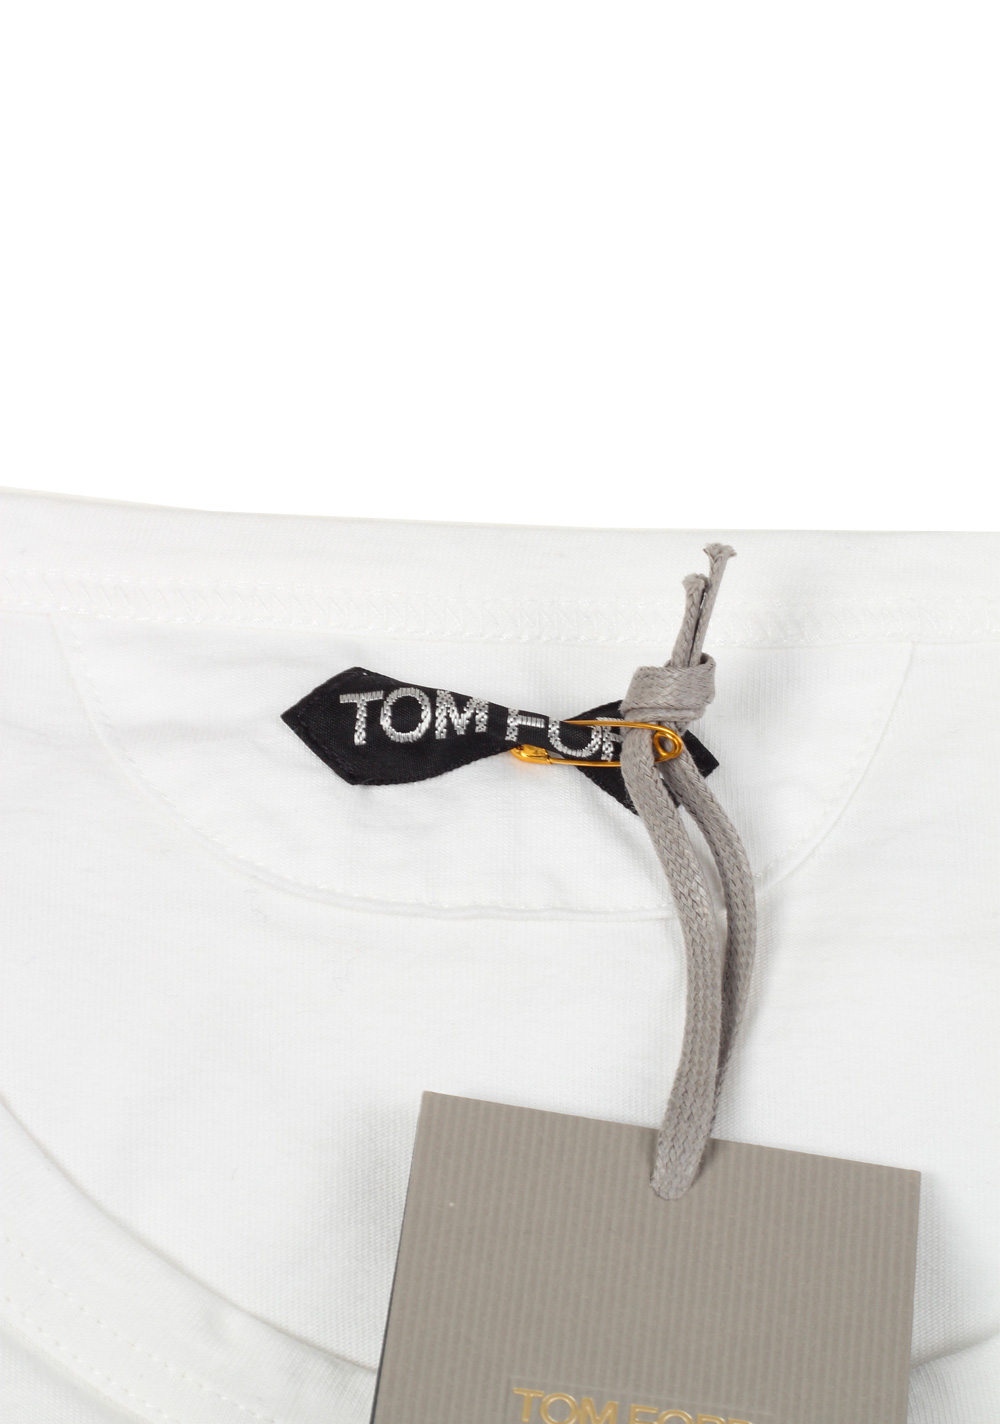 TOM FORD Crew Neck White Tee Shirt Size 48 / 38R U.S. | Costume Limité